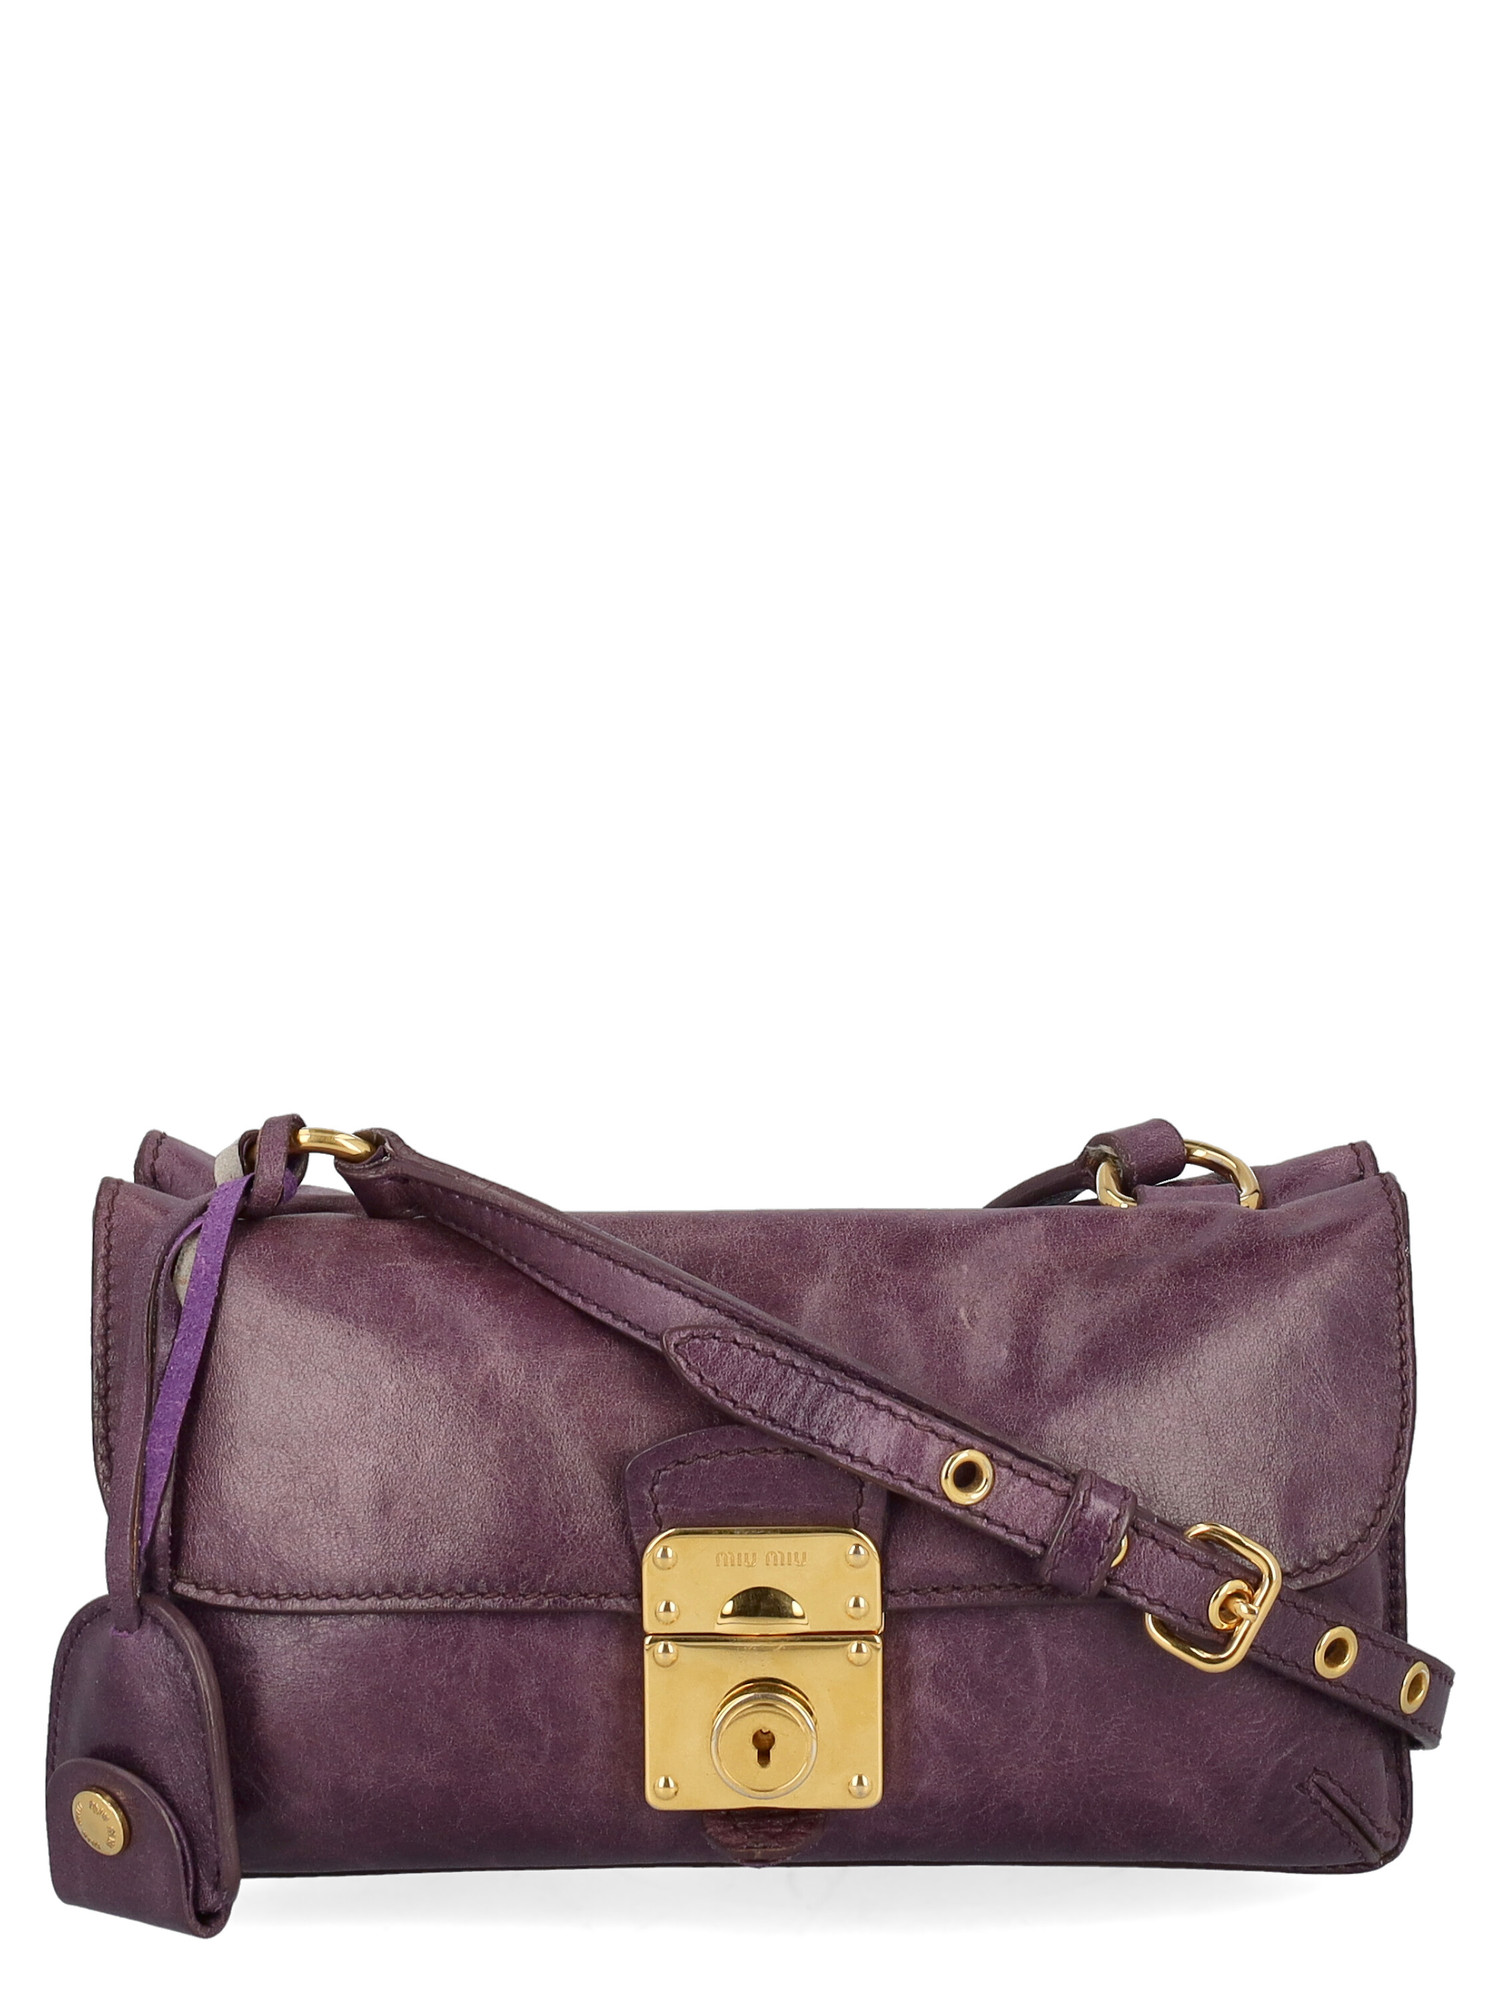 Pre-Owned & Vintage MIU MIU Bags for Women | ModeSens